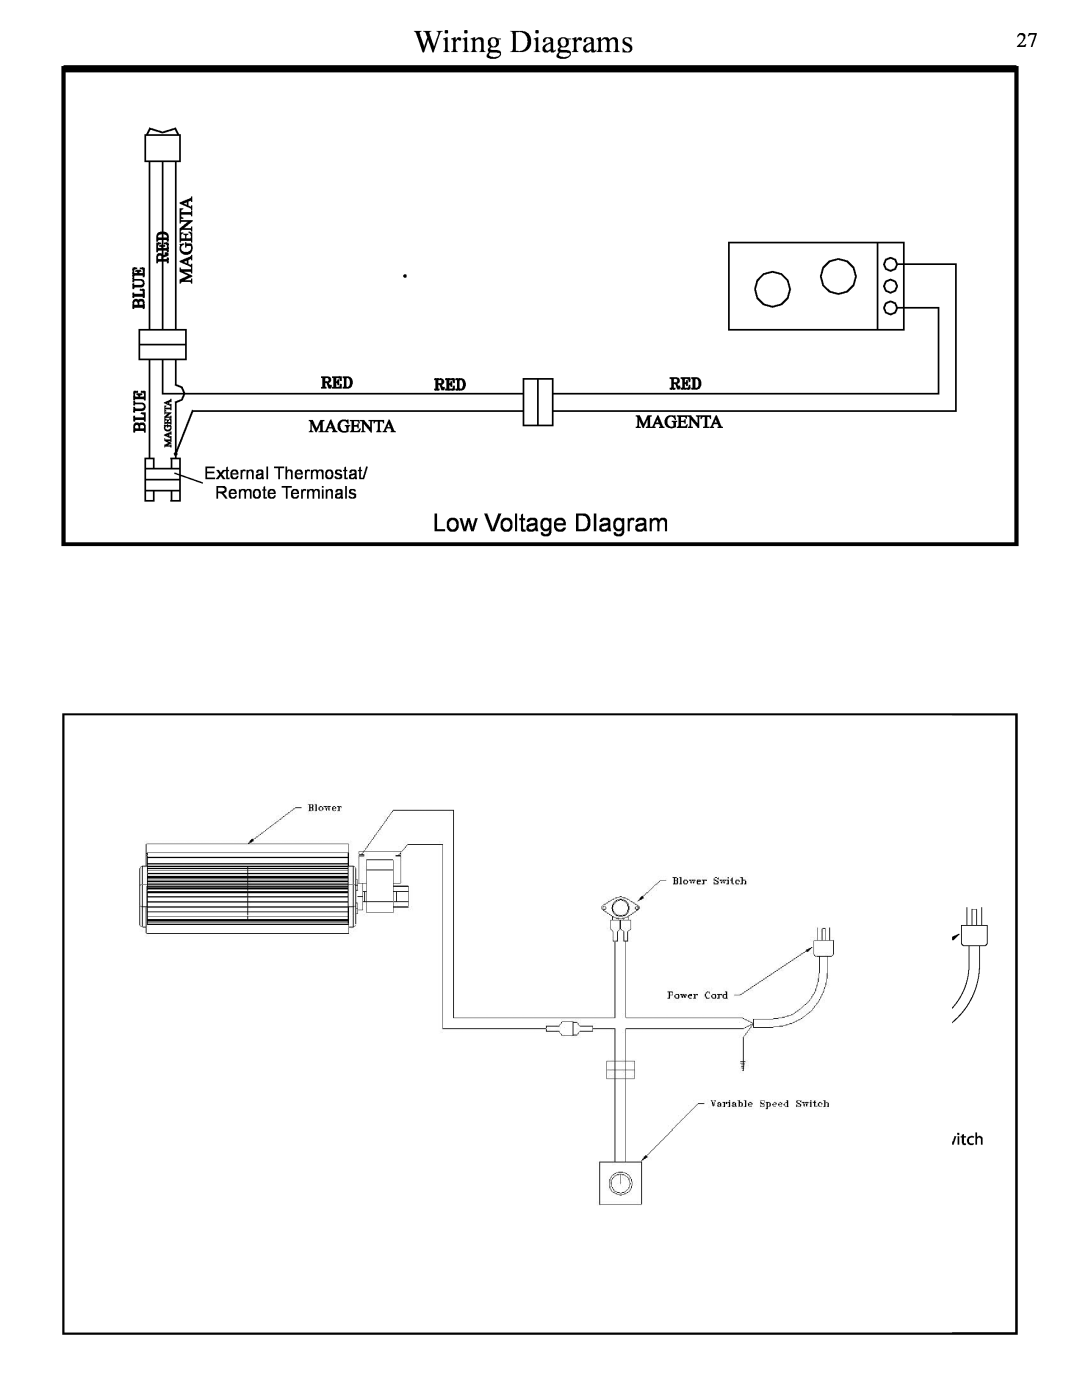 Harman Stove Company XL Wiring Diagrams, Low Voltage DIagram, High Voltage DIagram, Blower, Power Cord, Magenta 